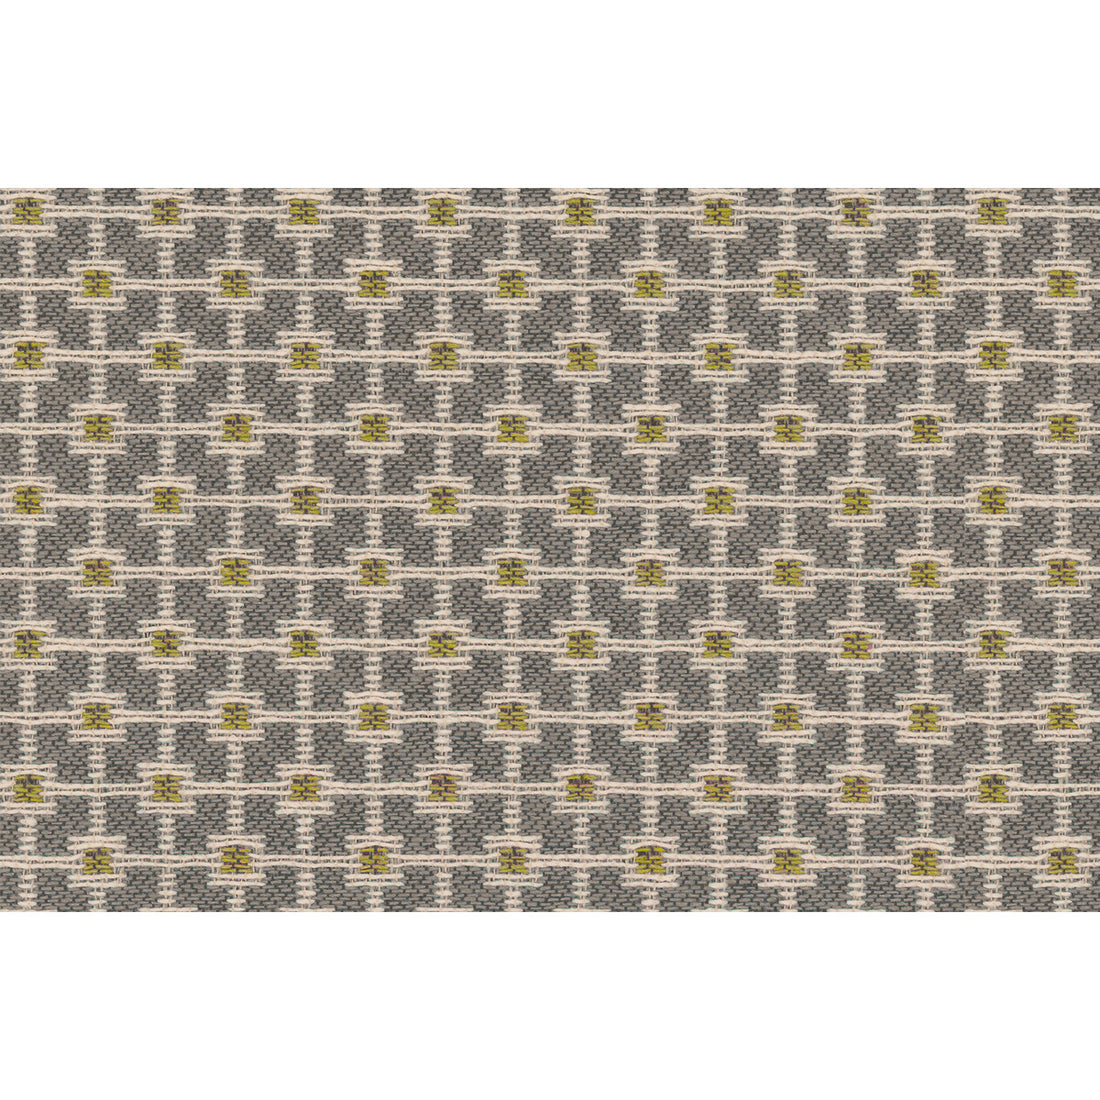 Kravet Smart fabric in 34311-411 color - pattern 34311.411.0 - by Kravet Smart